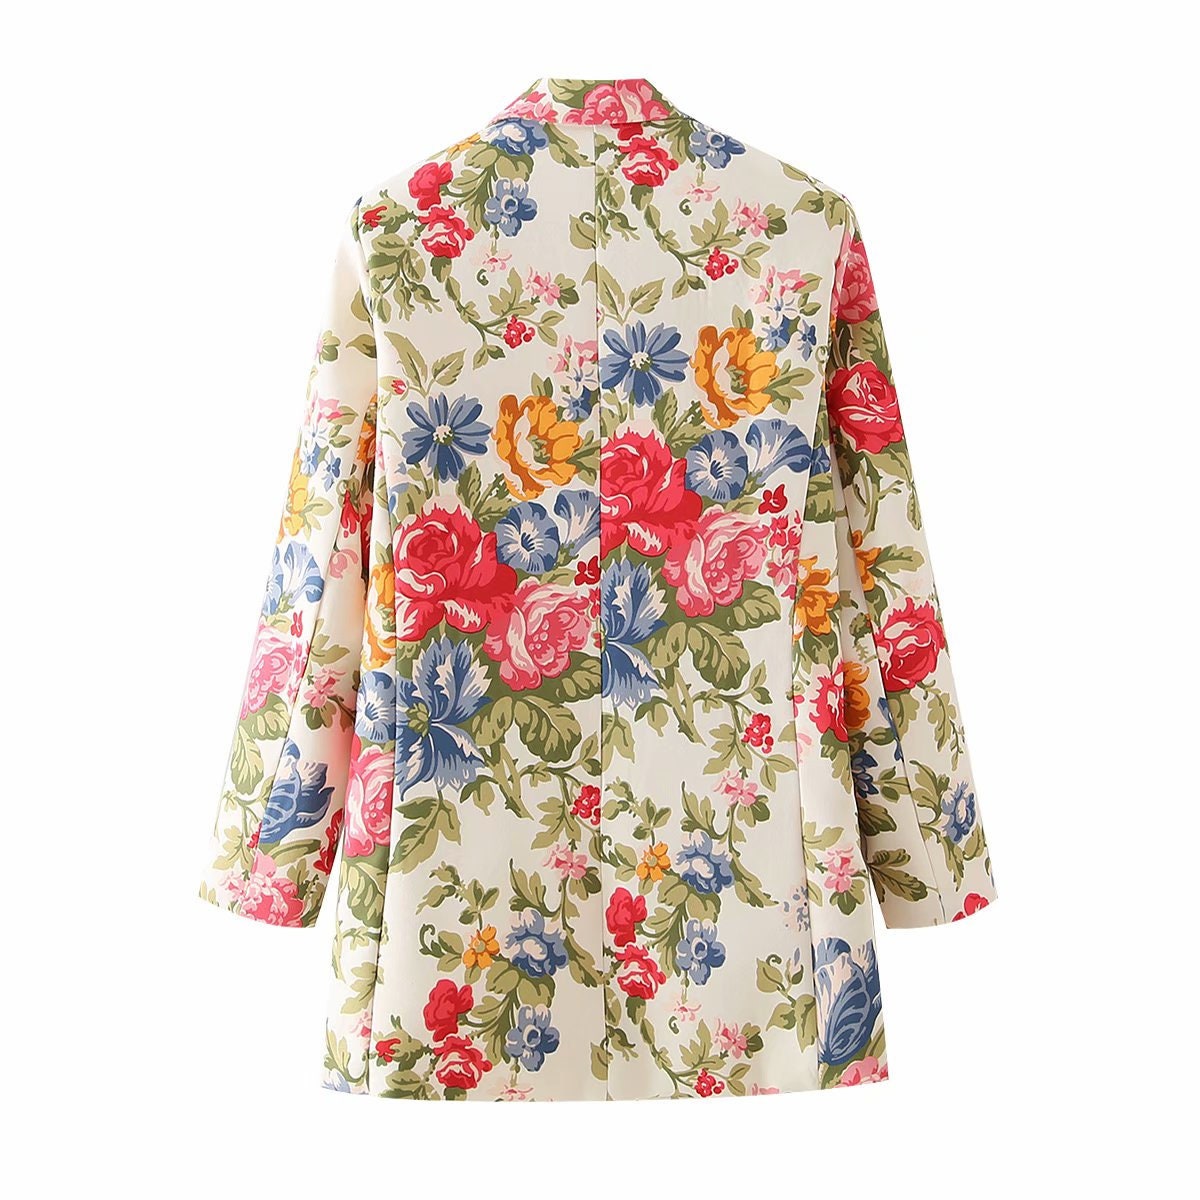 Floral art pattern blazer colorful print jacket long sleeves | Etsy